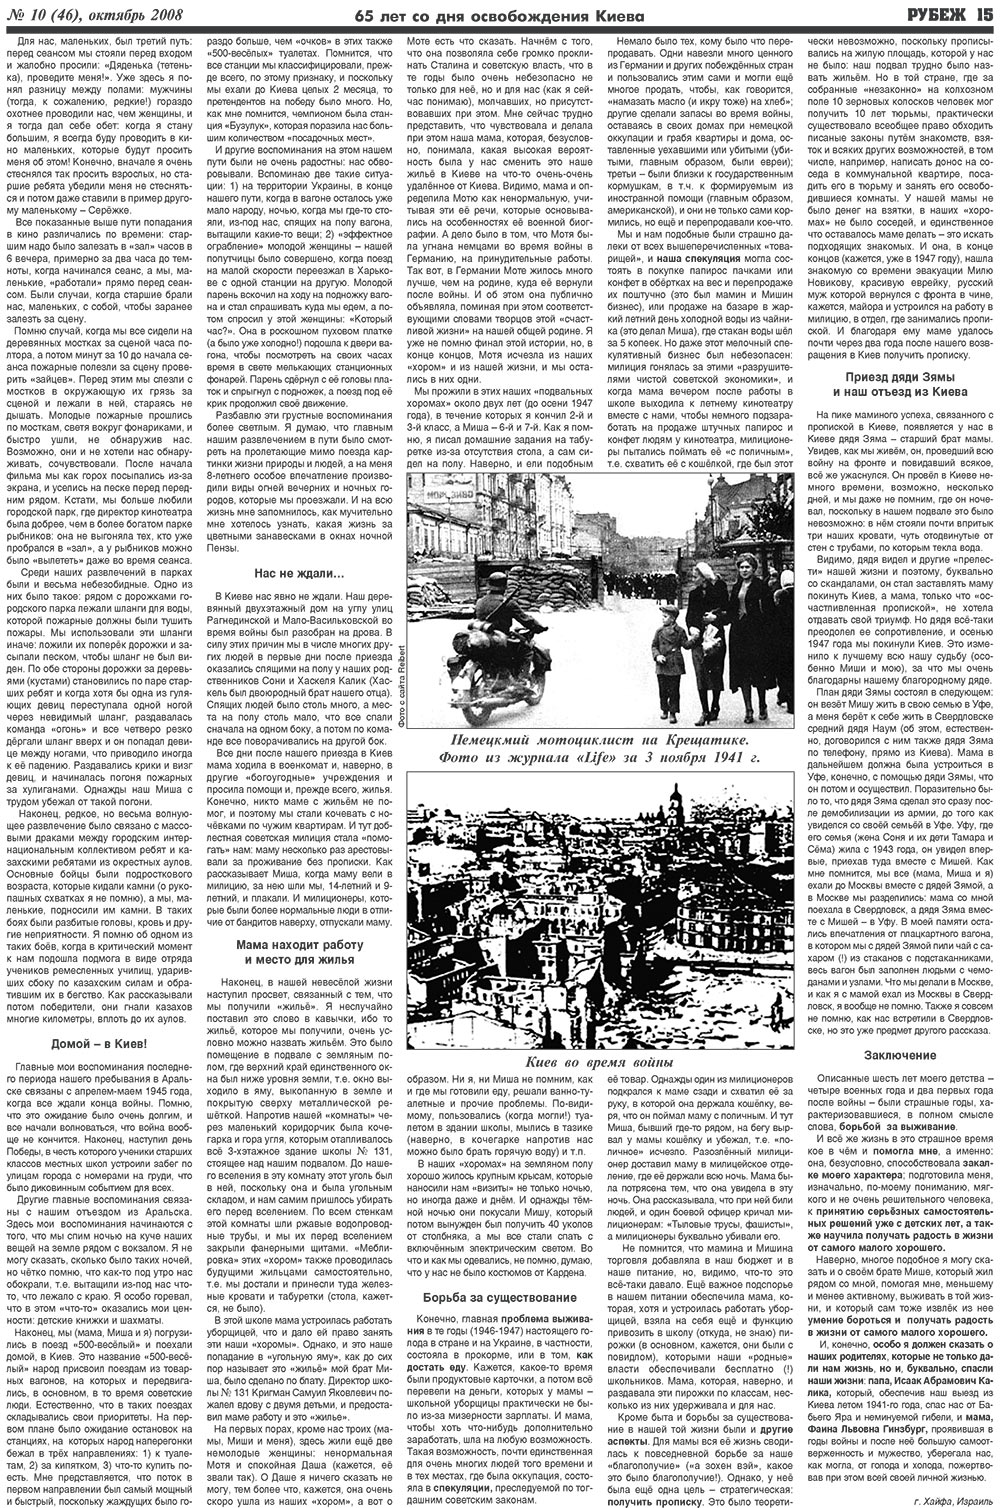 Рубеж, газета. 2008 №10 стр.15